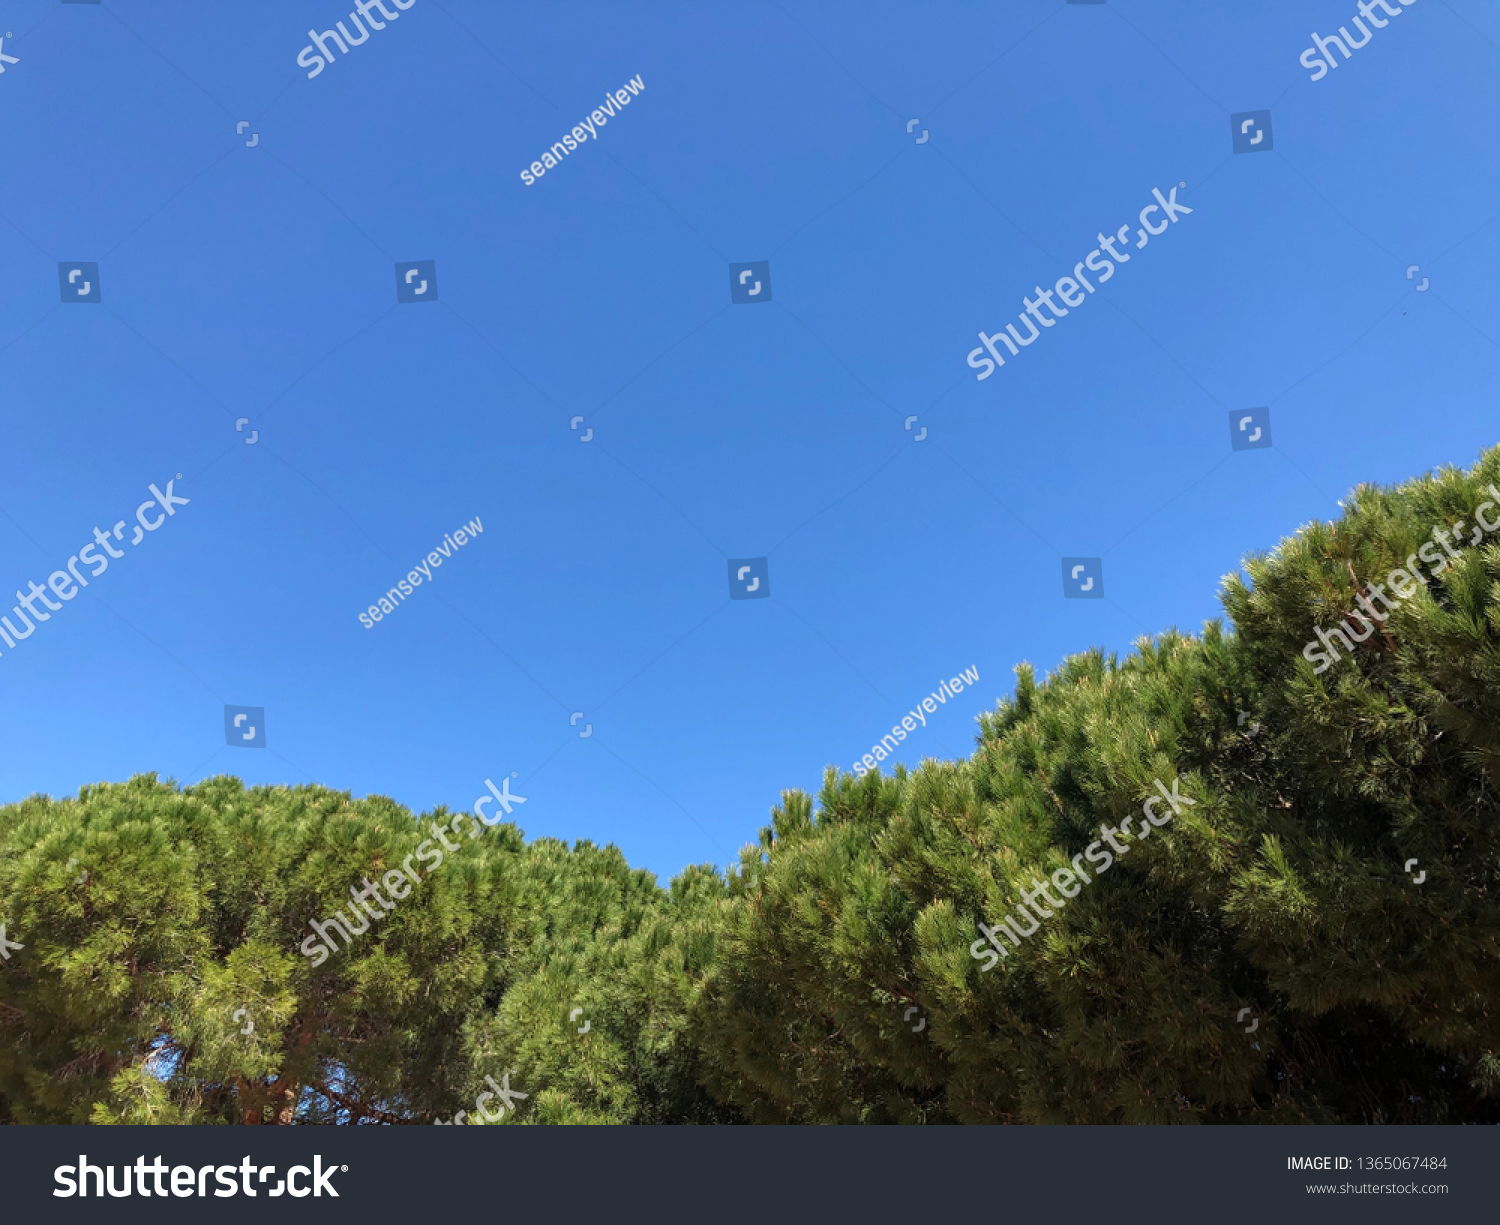 Green pine tree canopies under a dark blue clear sky in sunlight #1365067484